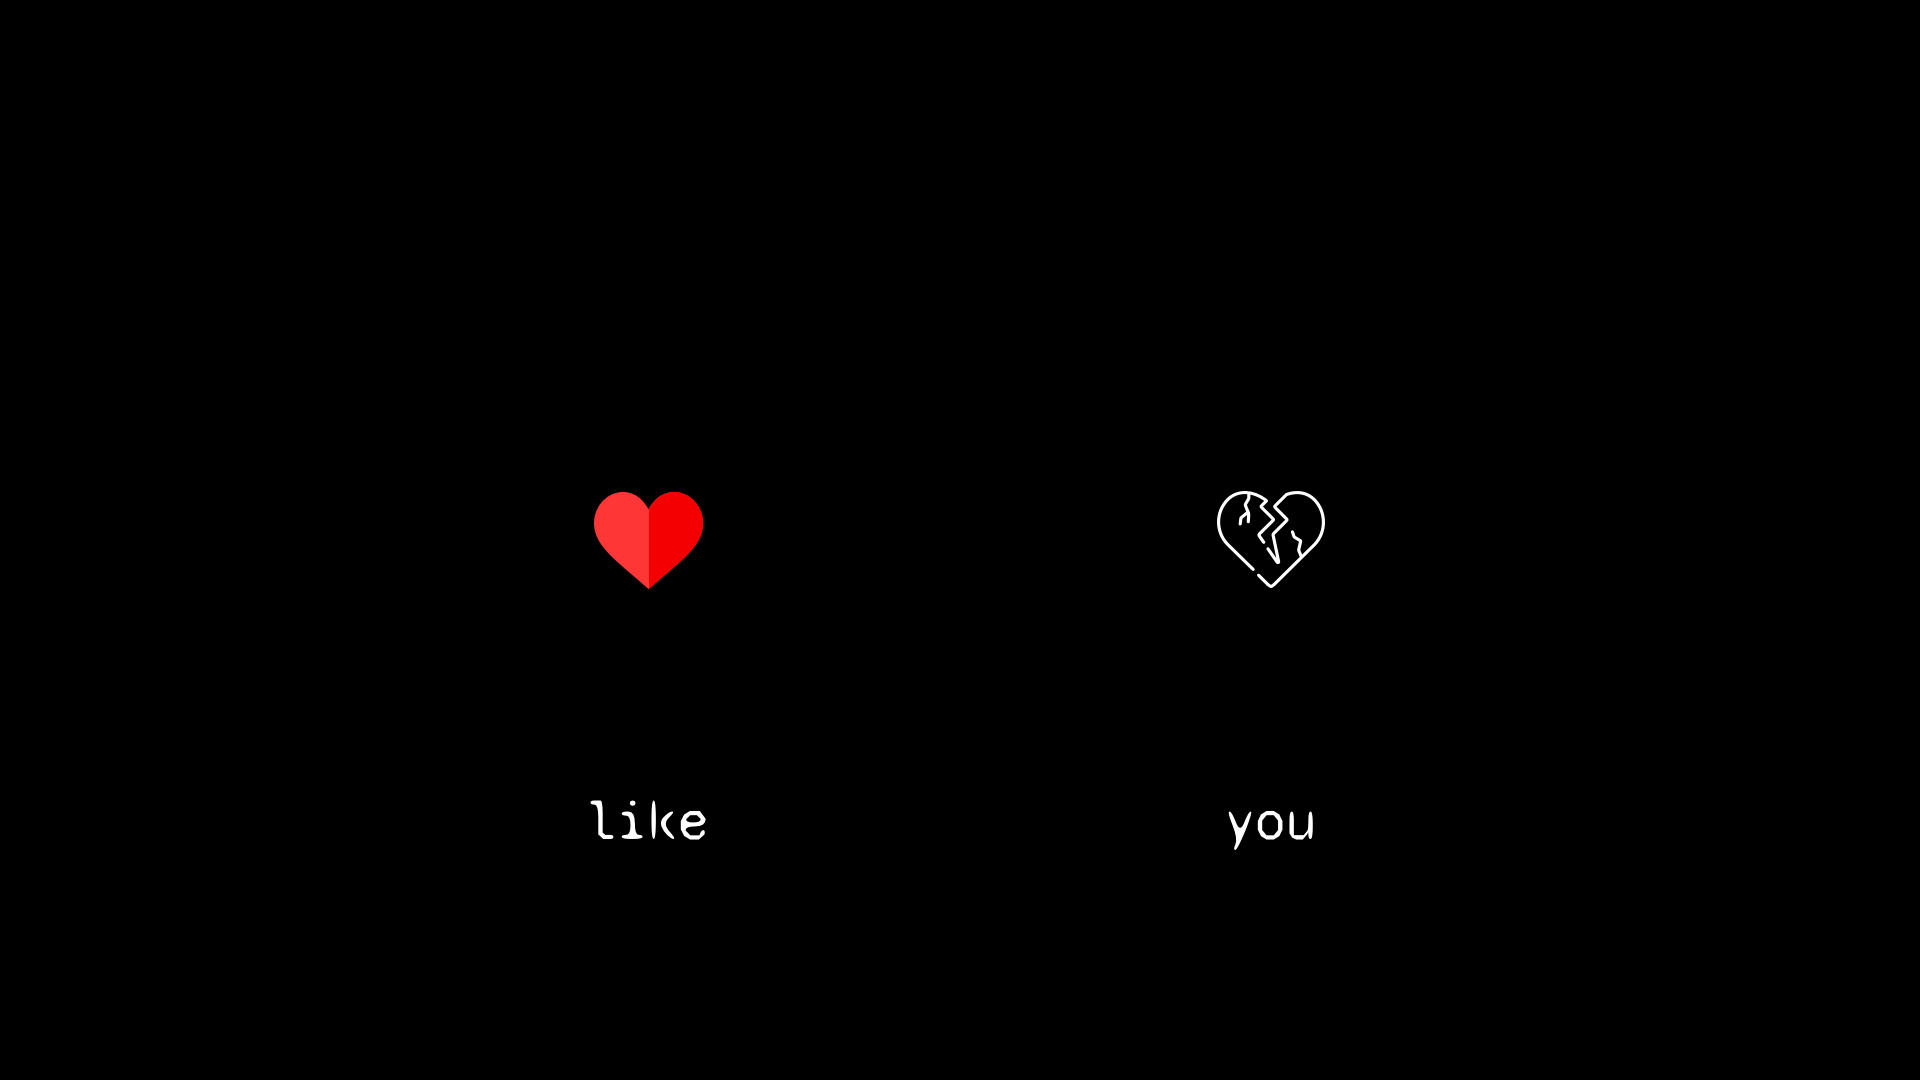 like vs you image heart